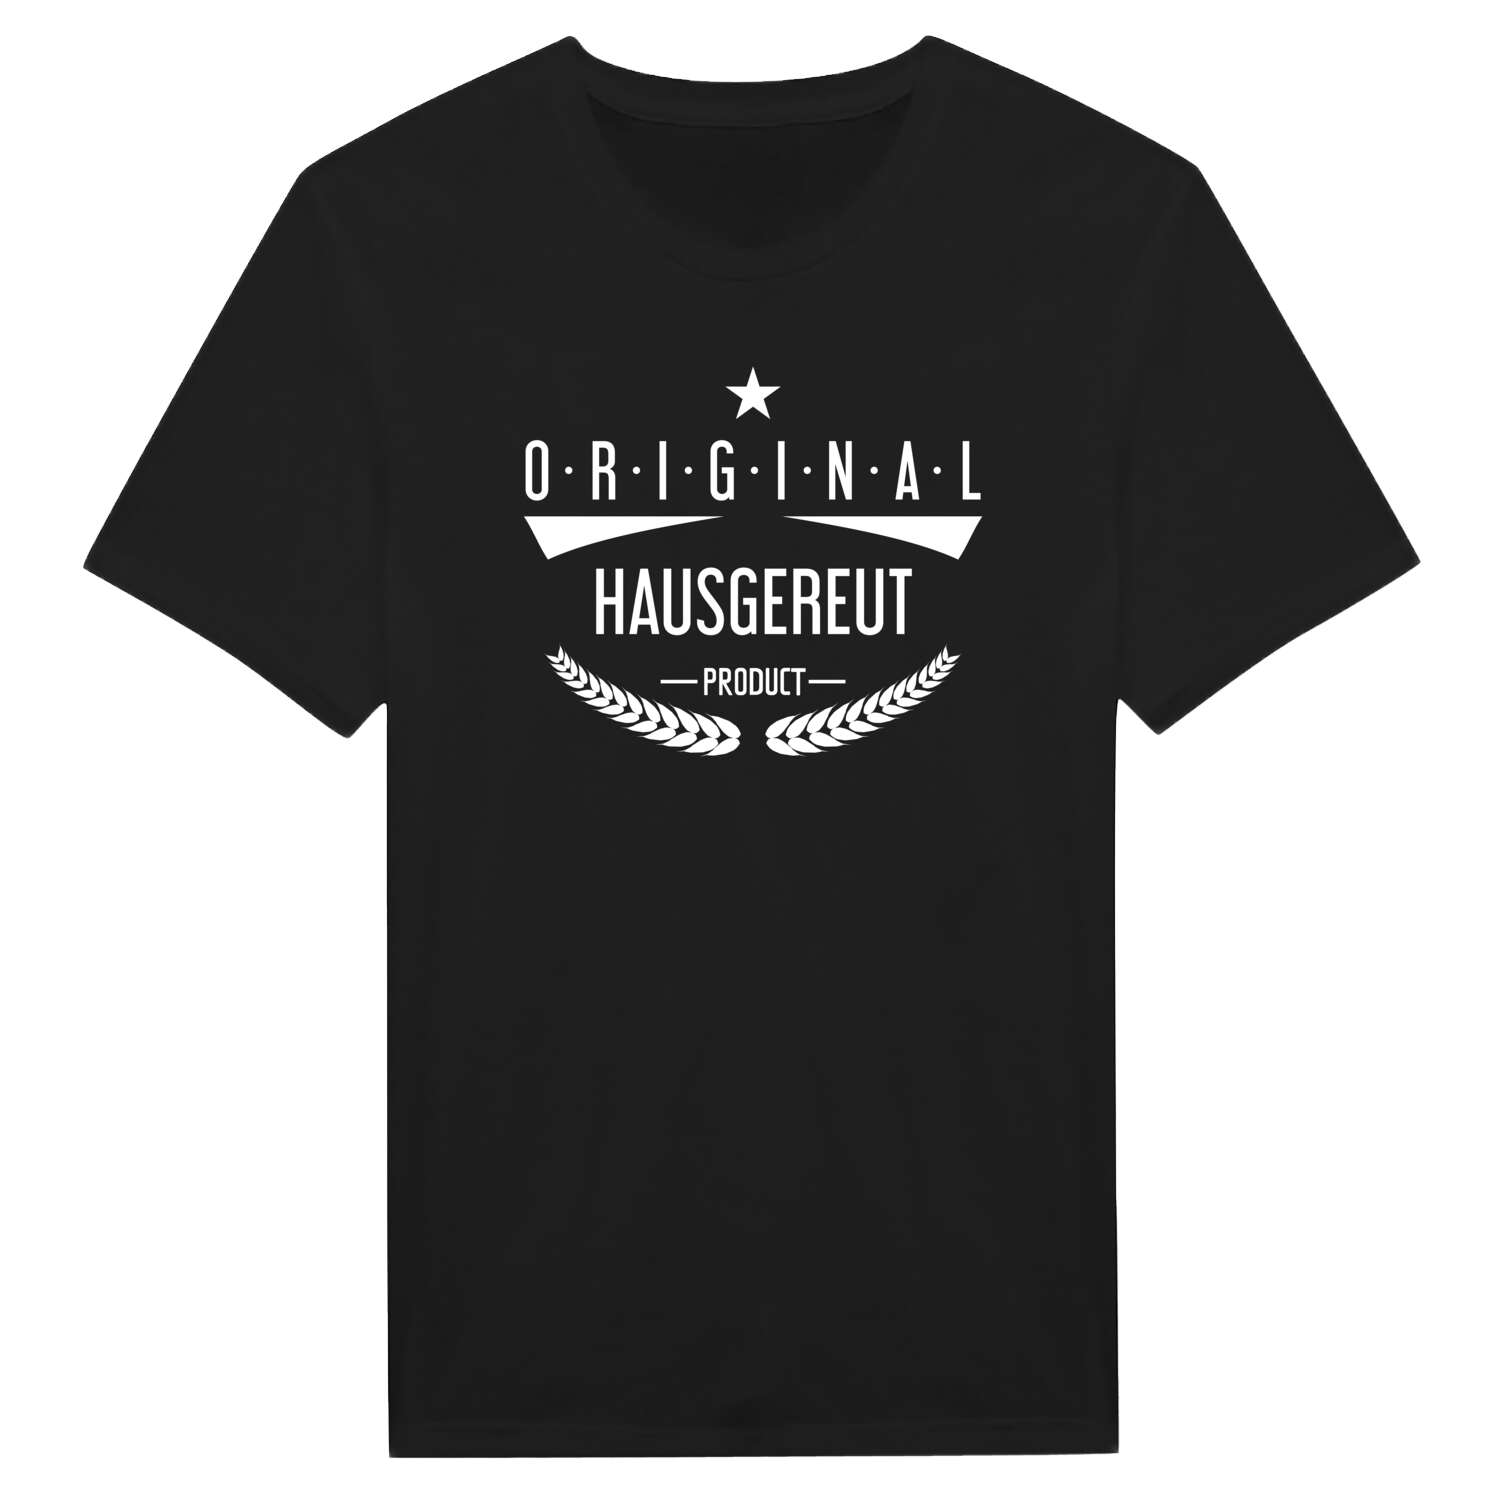 Hausgereut T-Shirt »Original Product«